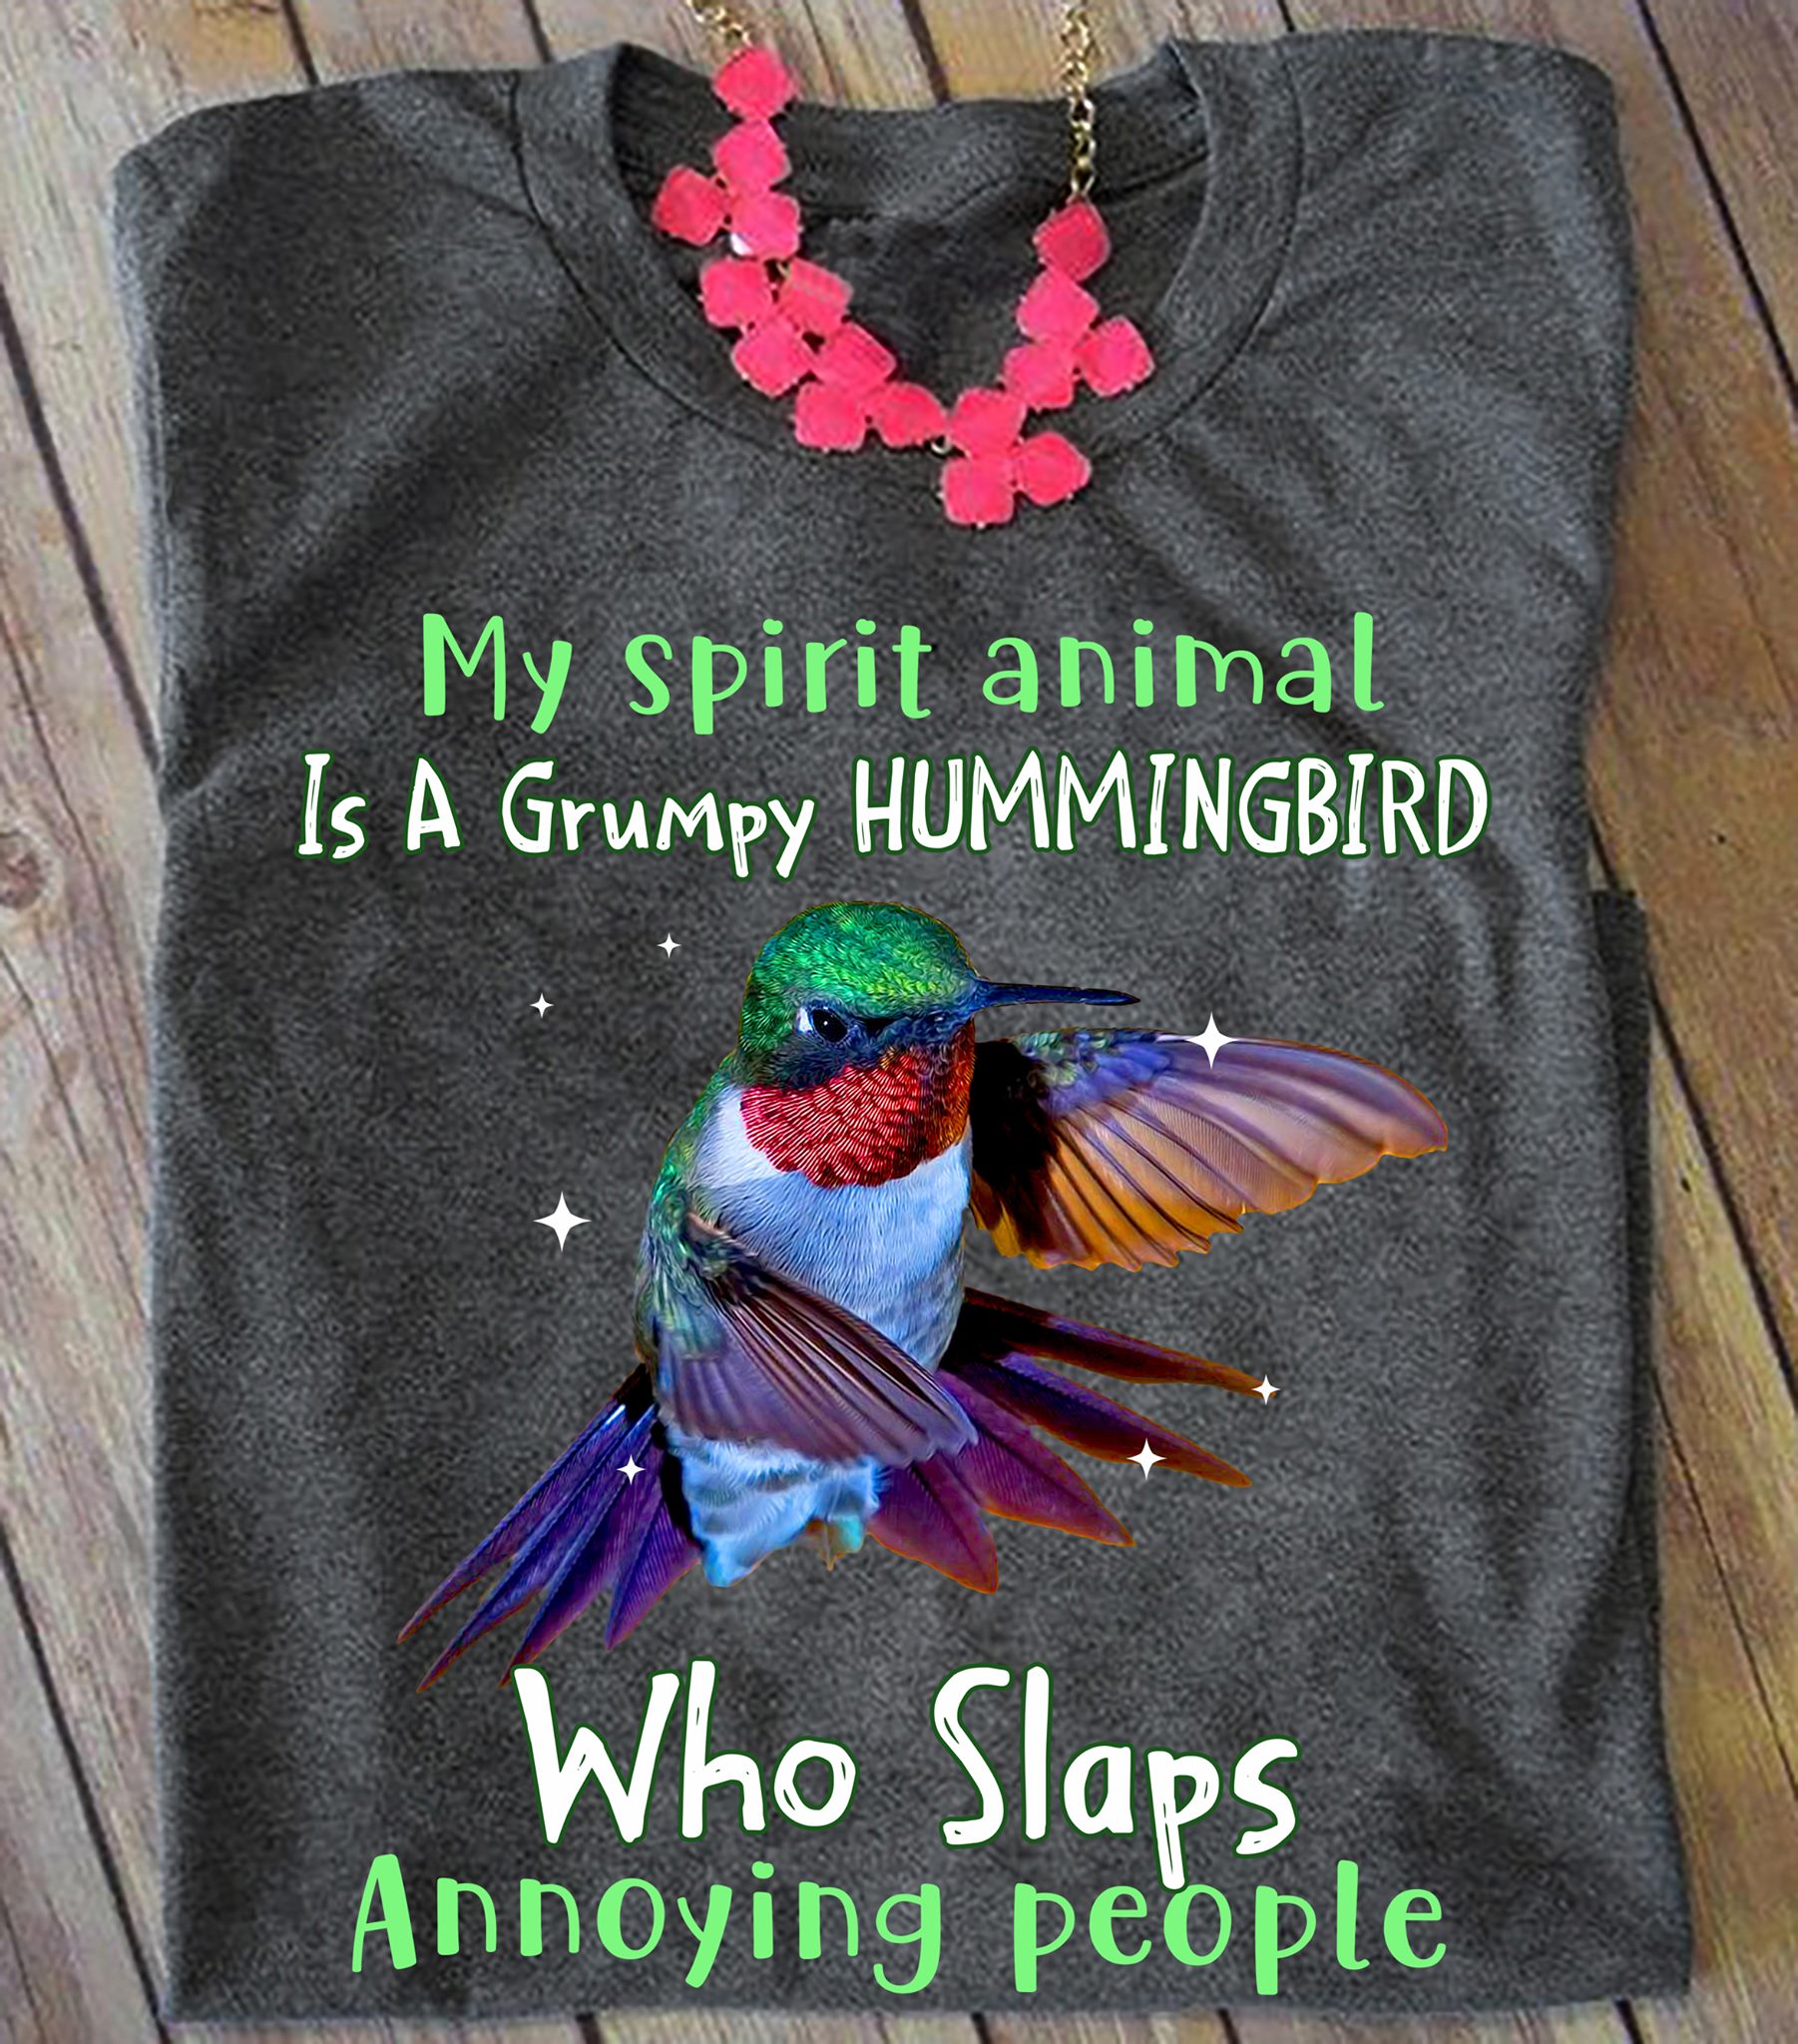 My spirit animal is a grumpy hummingbird who slaps annoying people